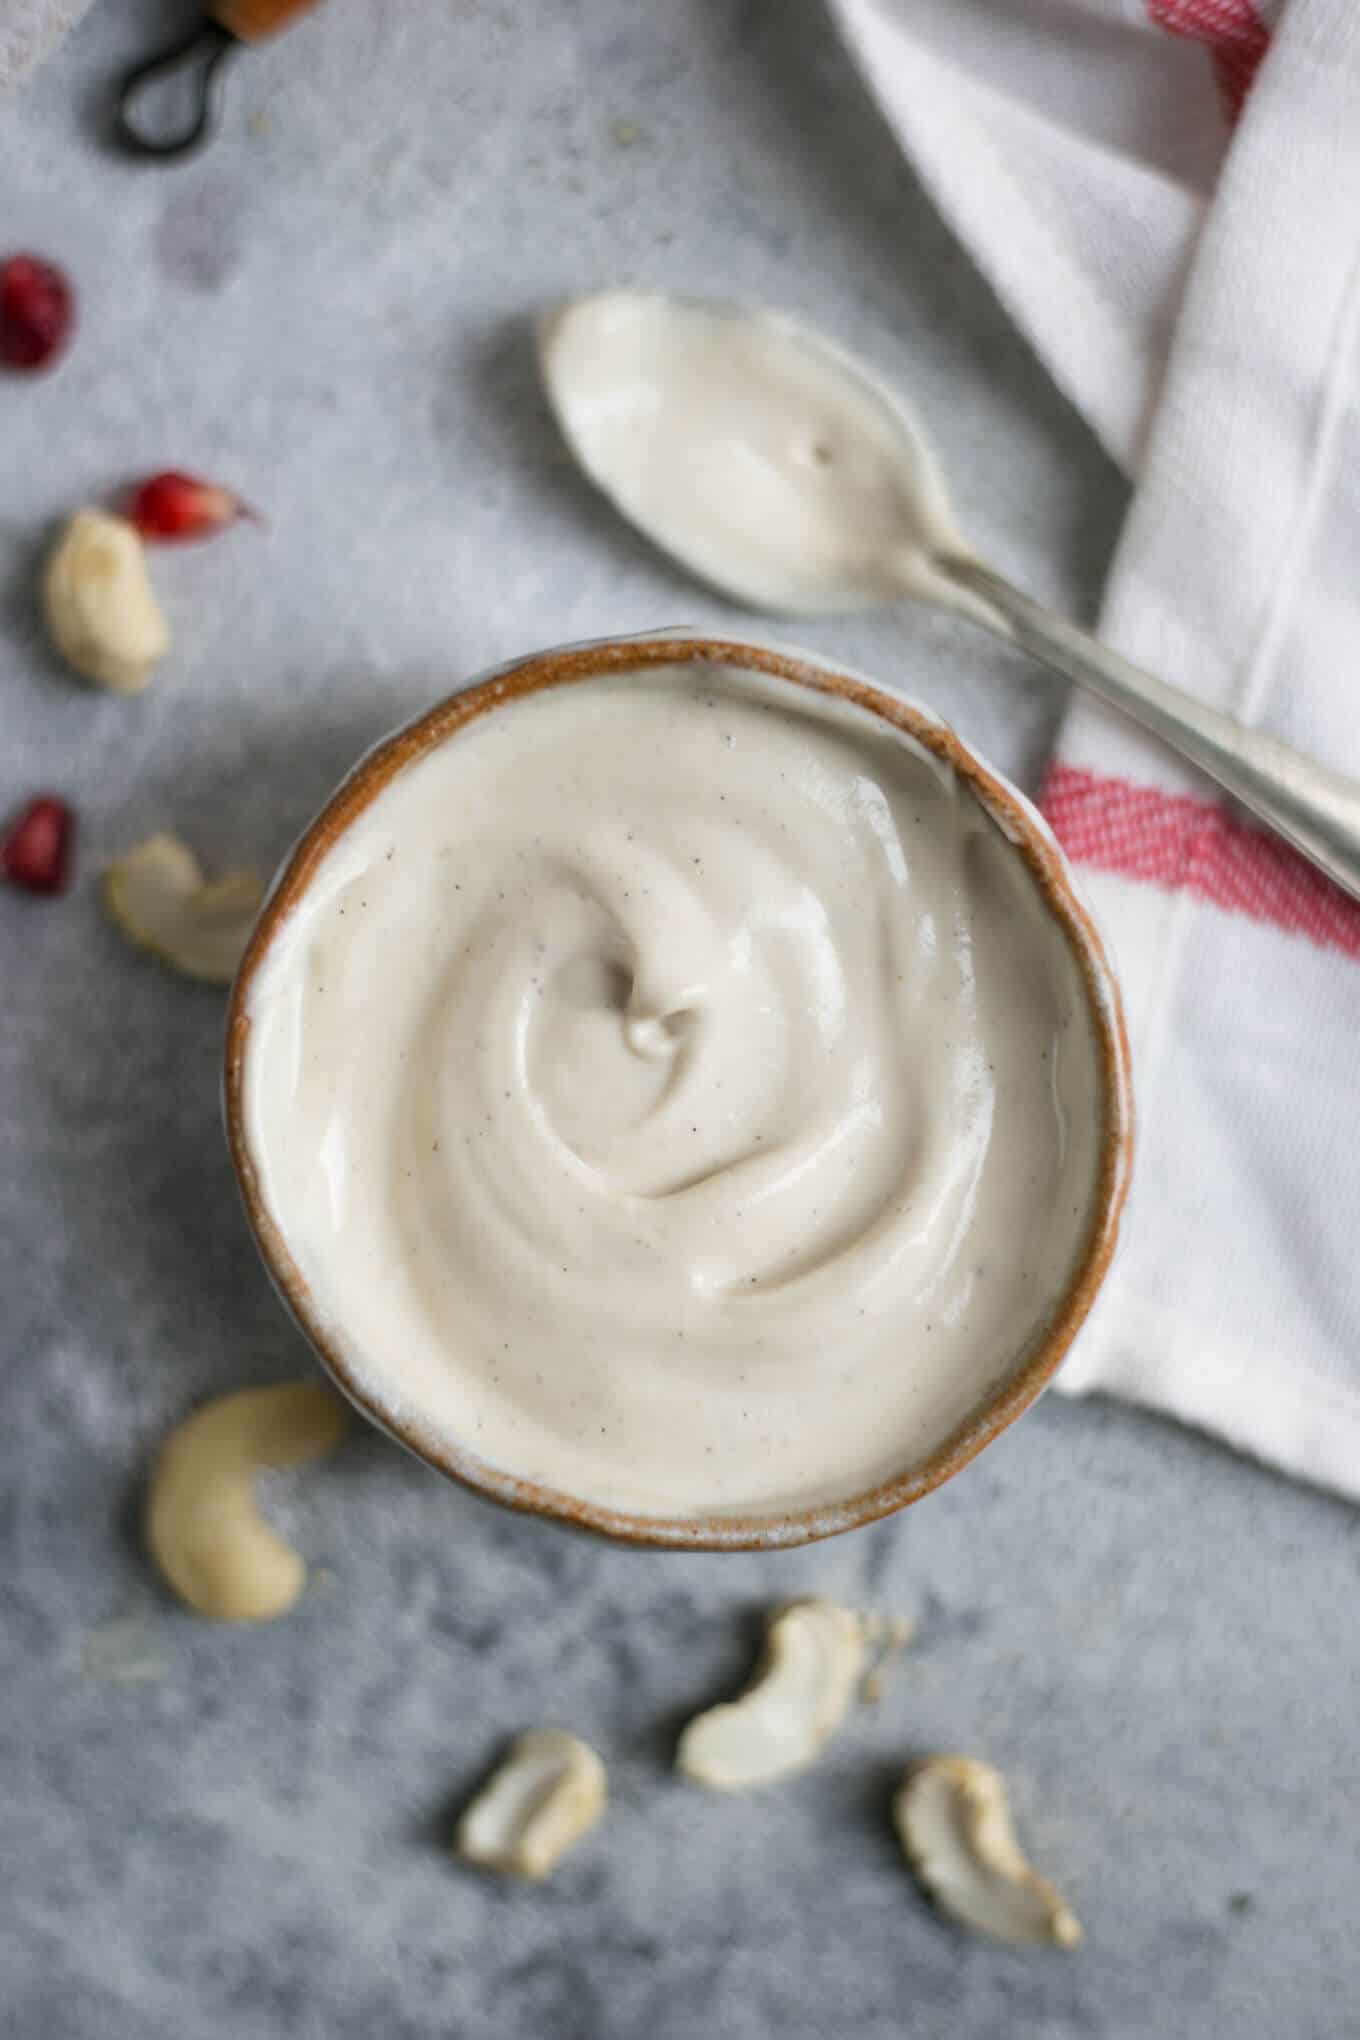 Vegan french crepes with vanilla cashew cream filling #vegan #crepes #dairyfree | via @annabanana.co